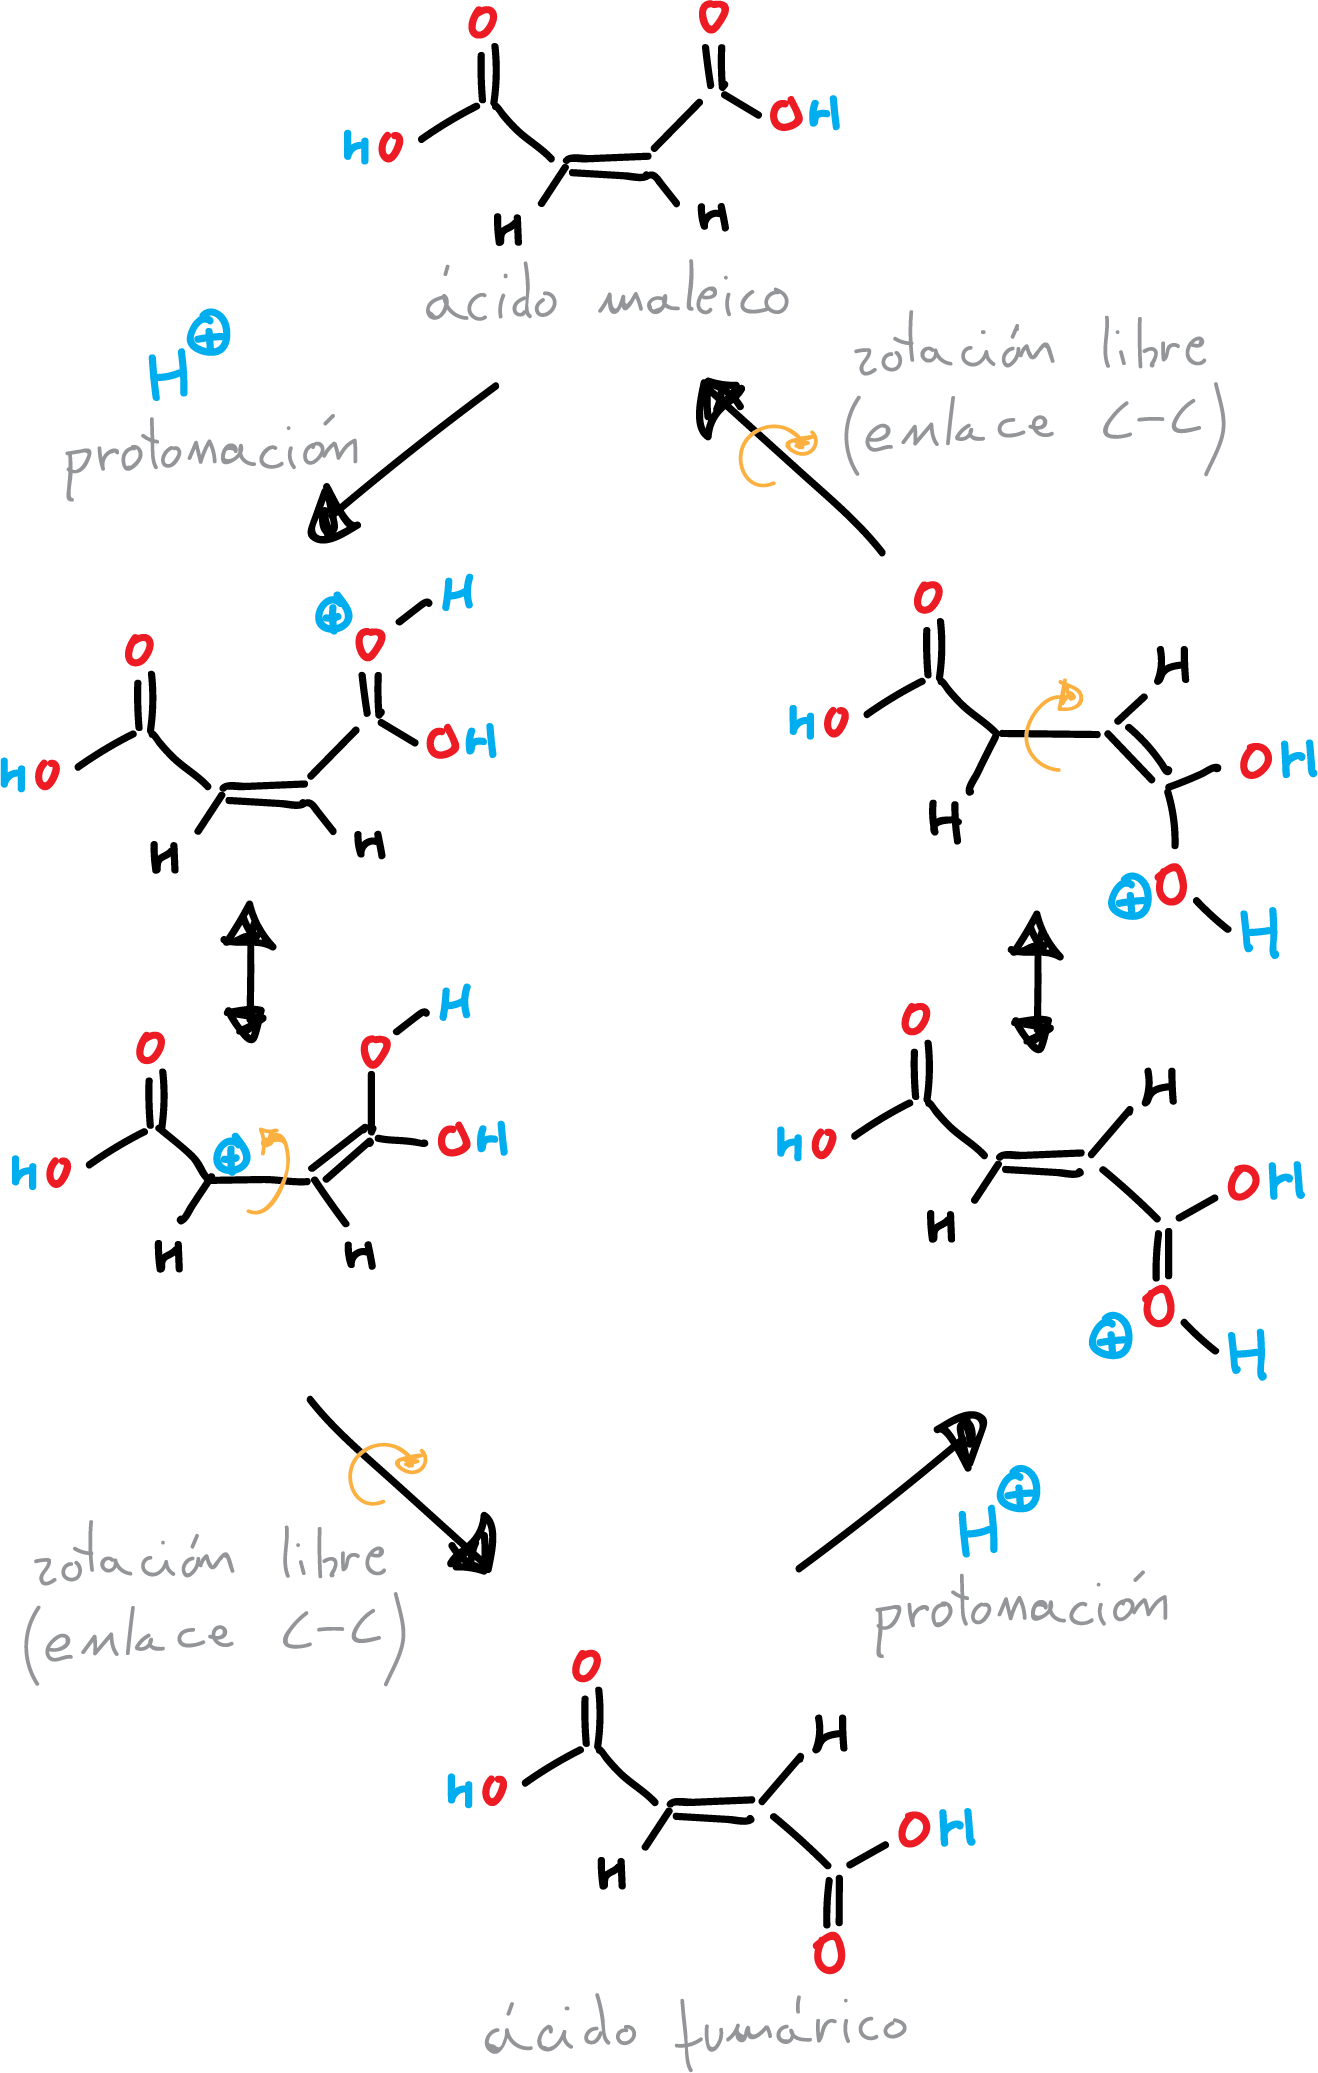 Isomerization of maleic acid (cis) to fumaric acid (trans)